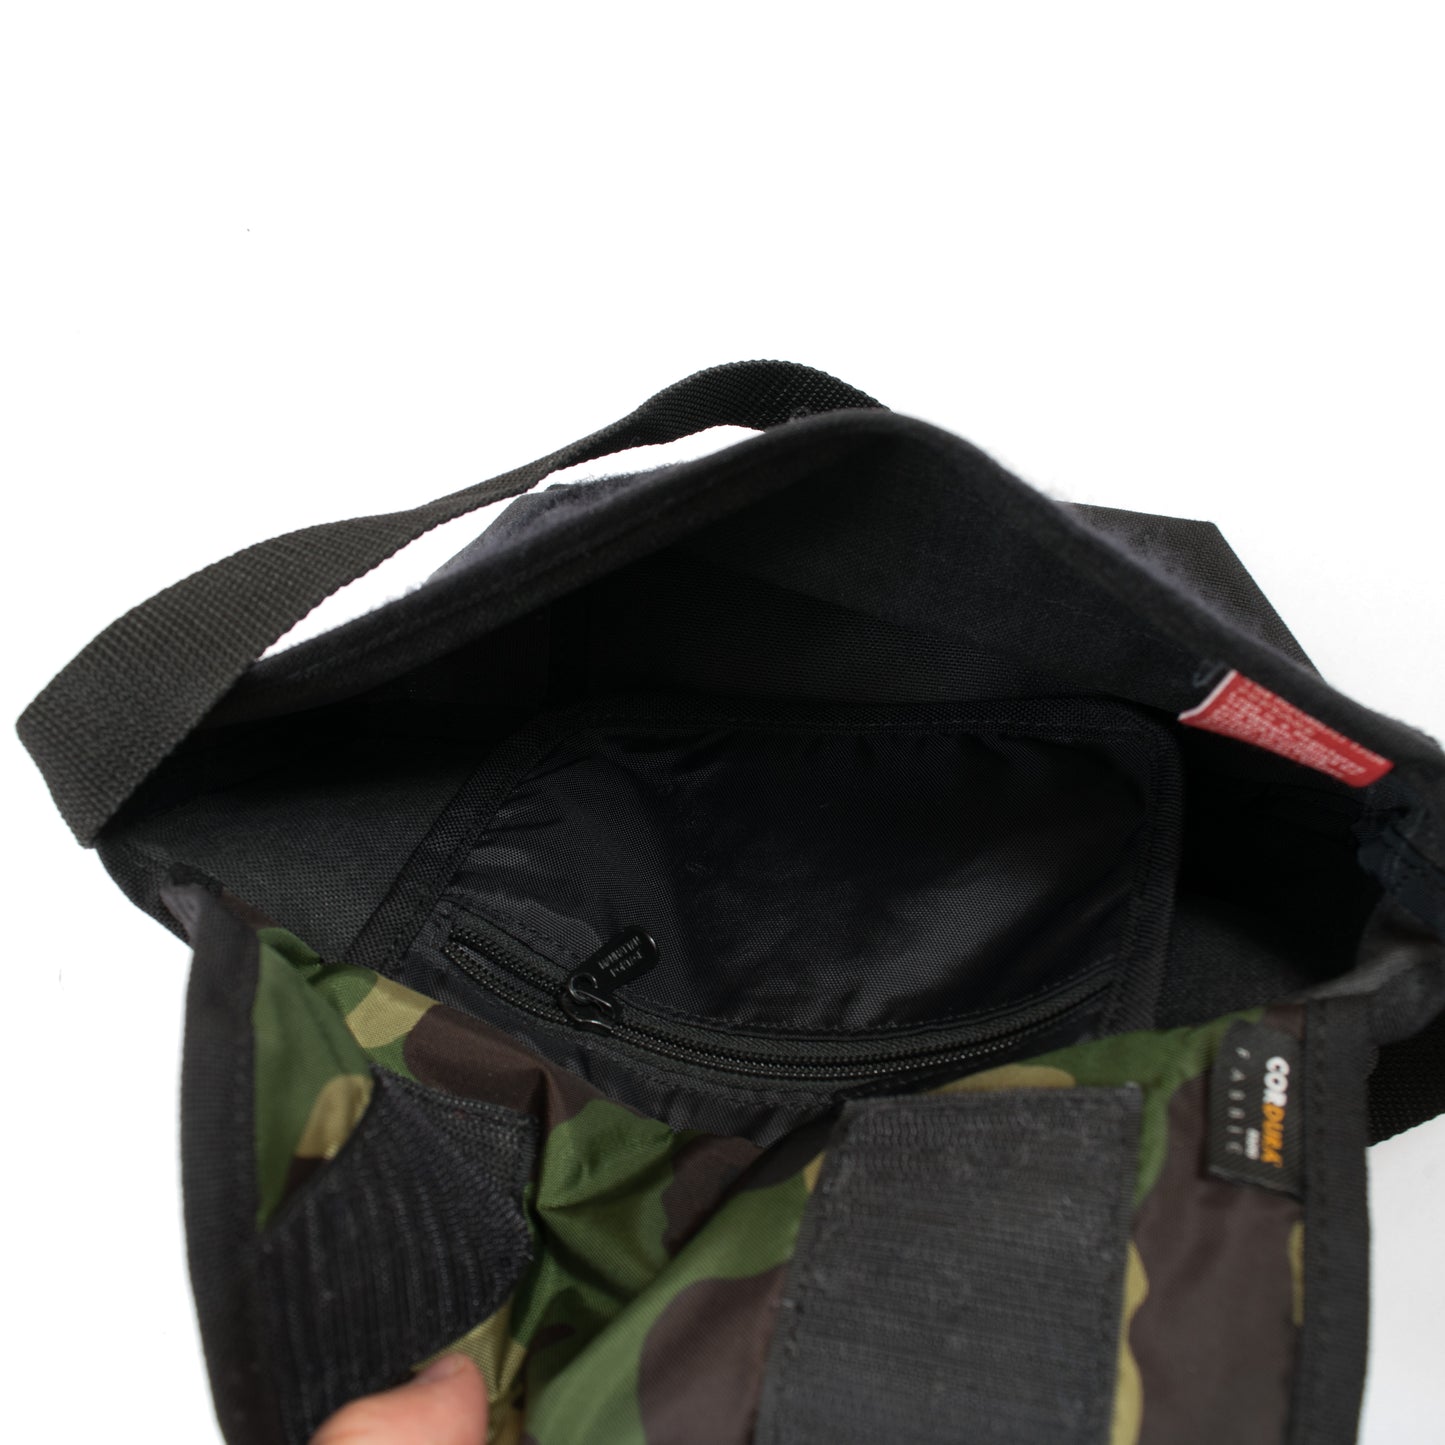 Undercover x Manhattan Portage Shoulder Bag